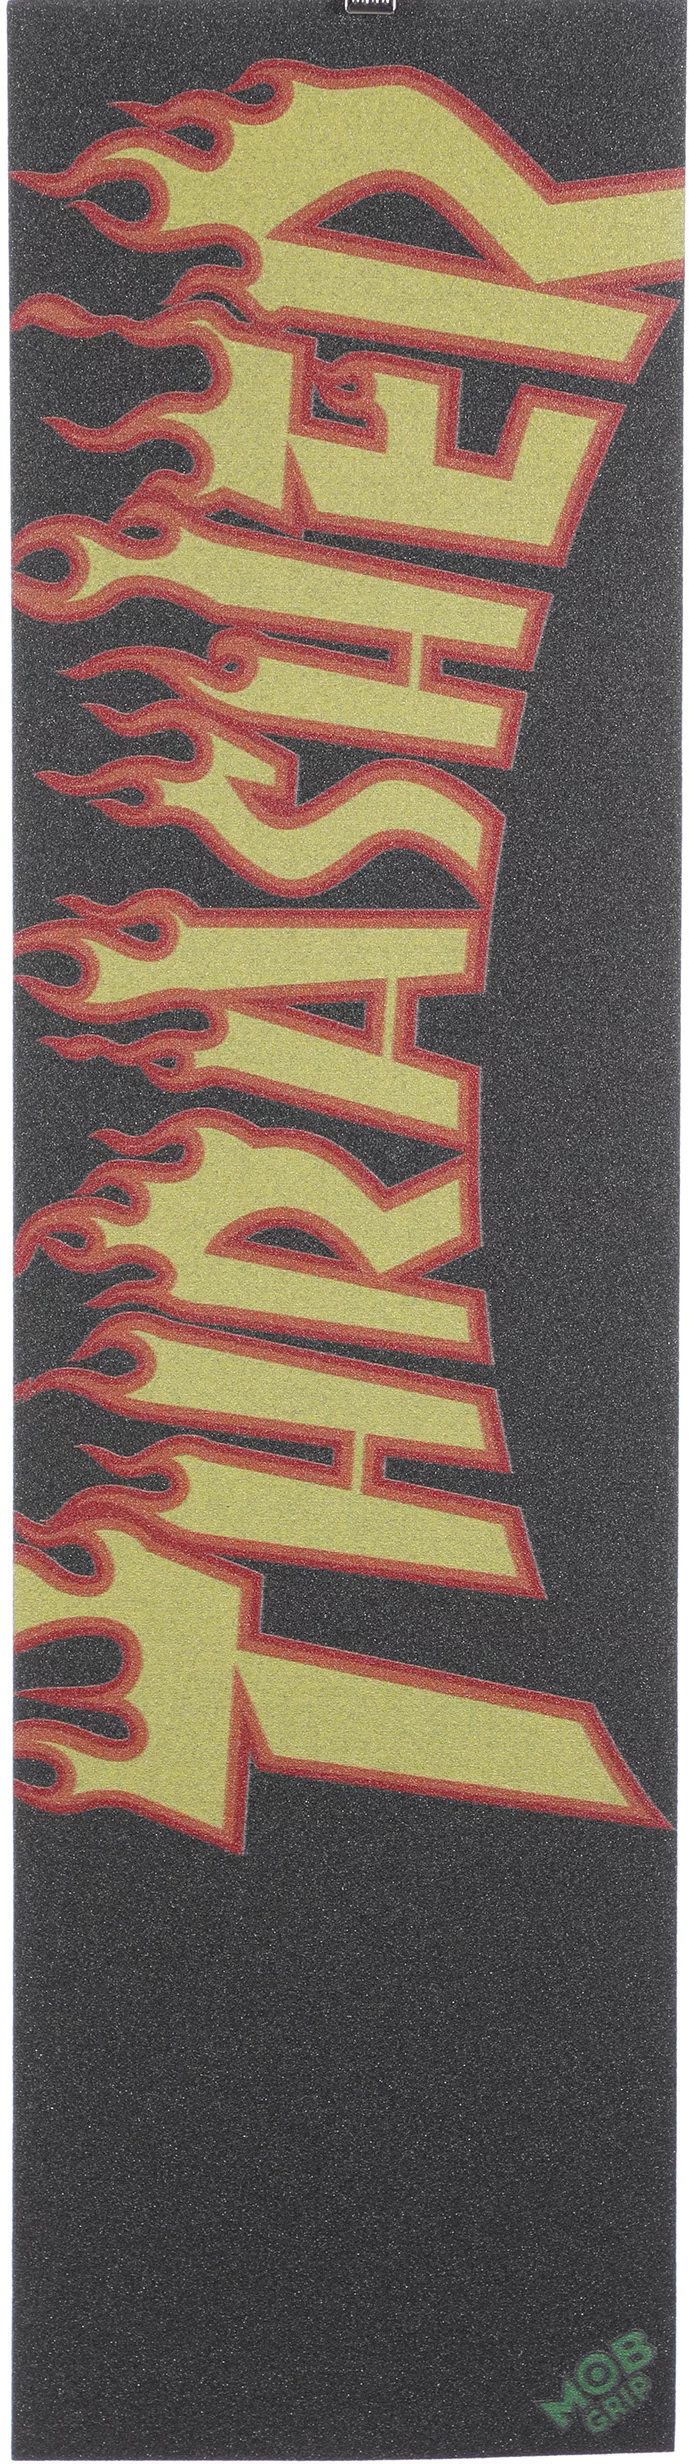 Grip Skateboard THRASHER Laser Cut Flame Logo